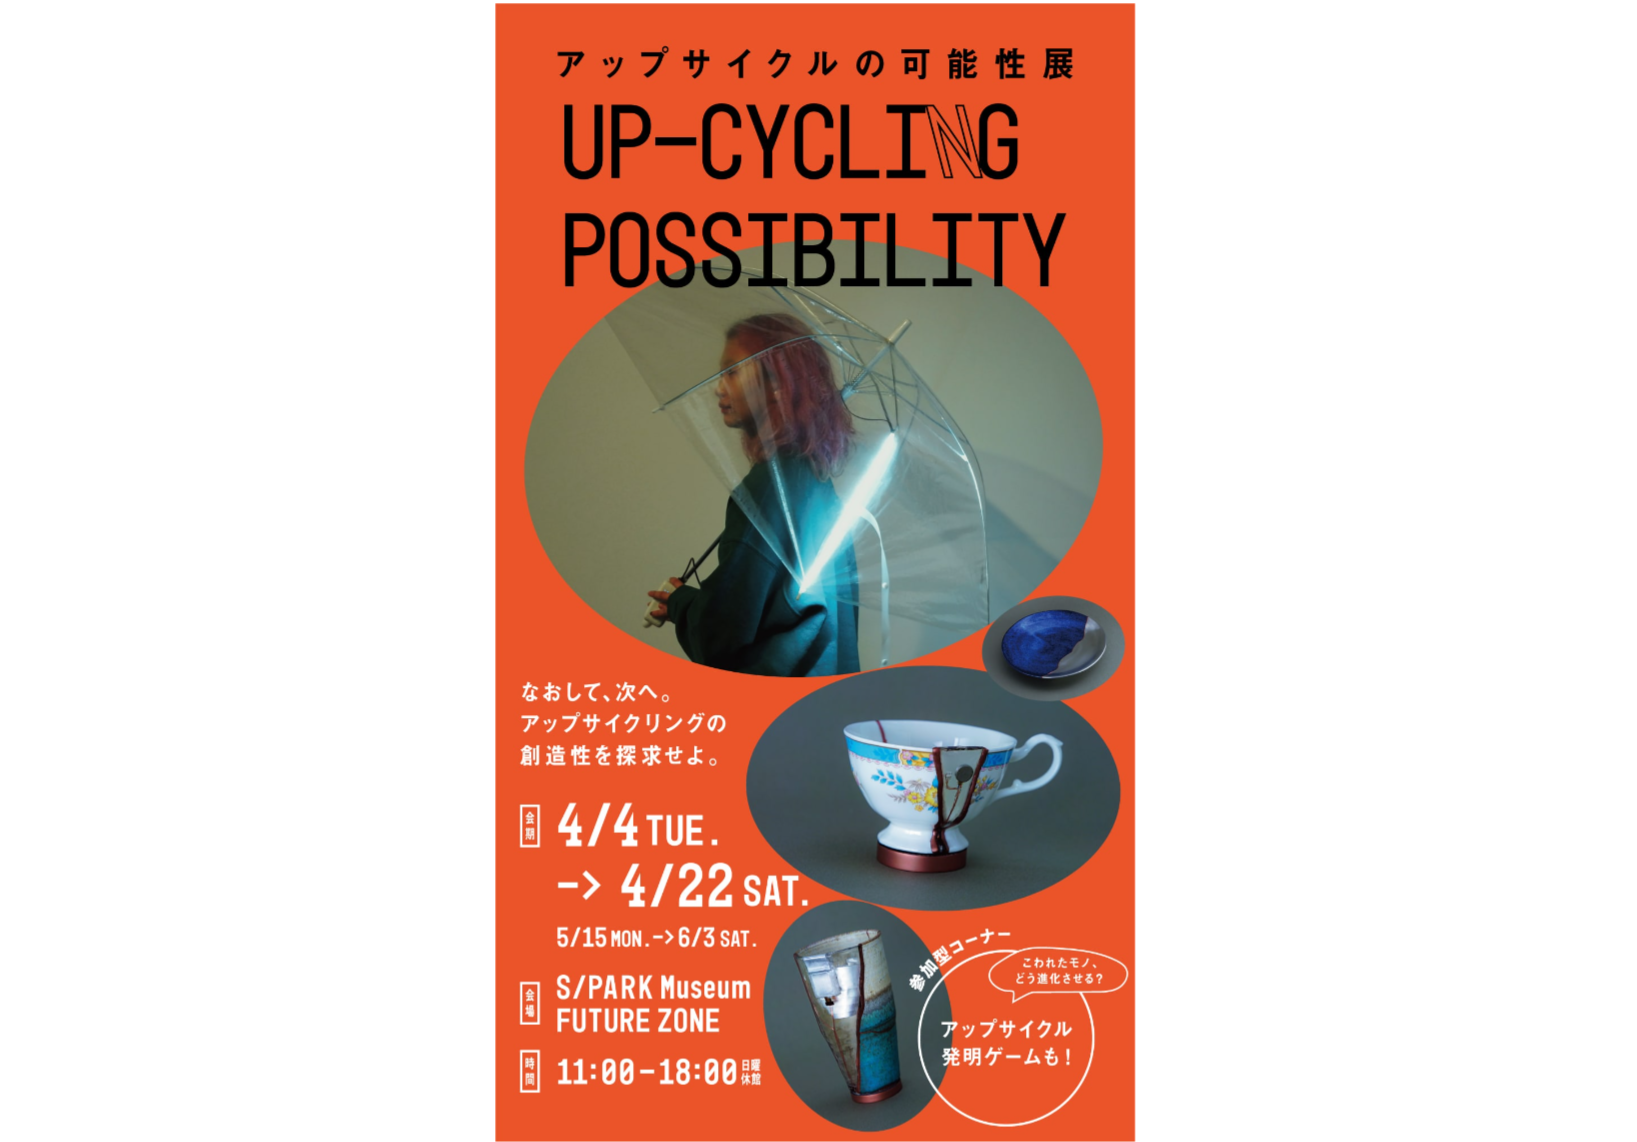 FireShot Capture 343 - アップサイクルの可能性展 UP-CYCLING POSSIBILITY - S PARK - 資生堂 - 横浜みなとみらい - カフェ・ラ - spark.shiseido.co.jp